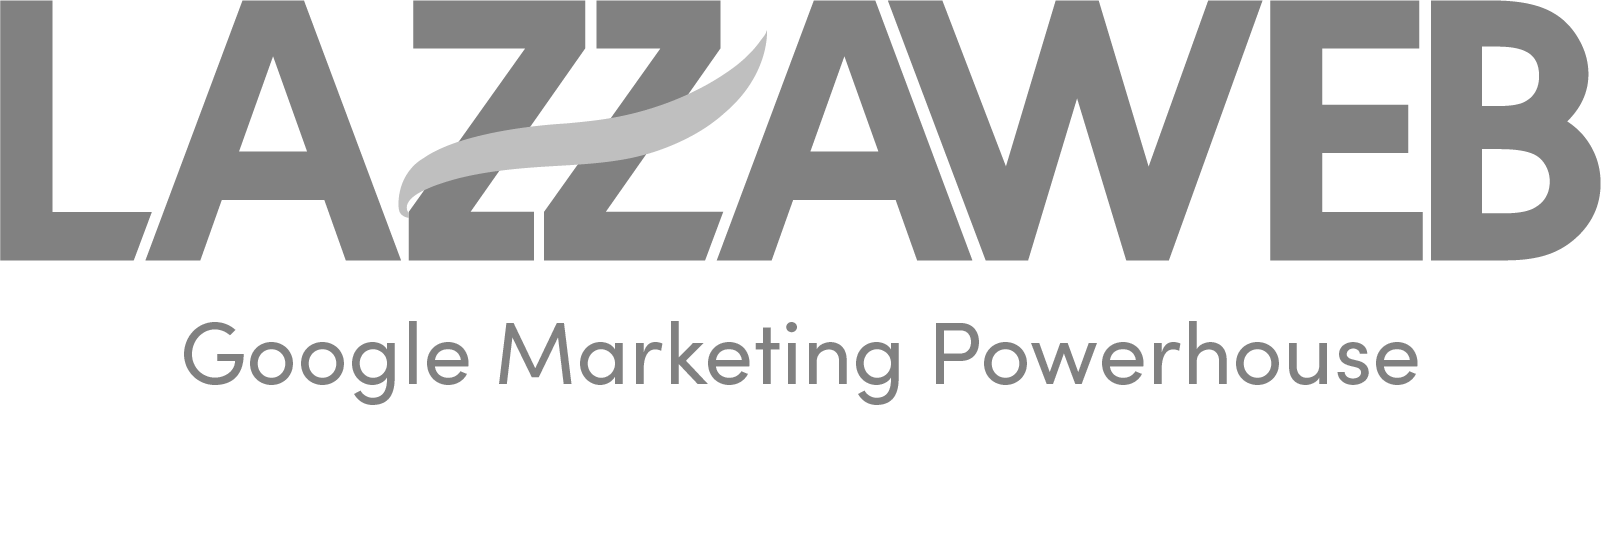 Lazzaweb logo